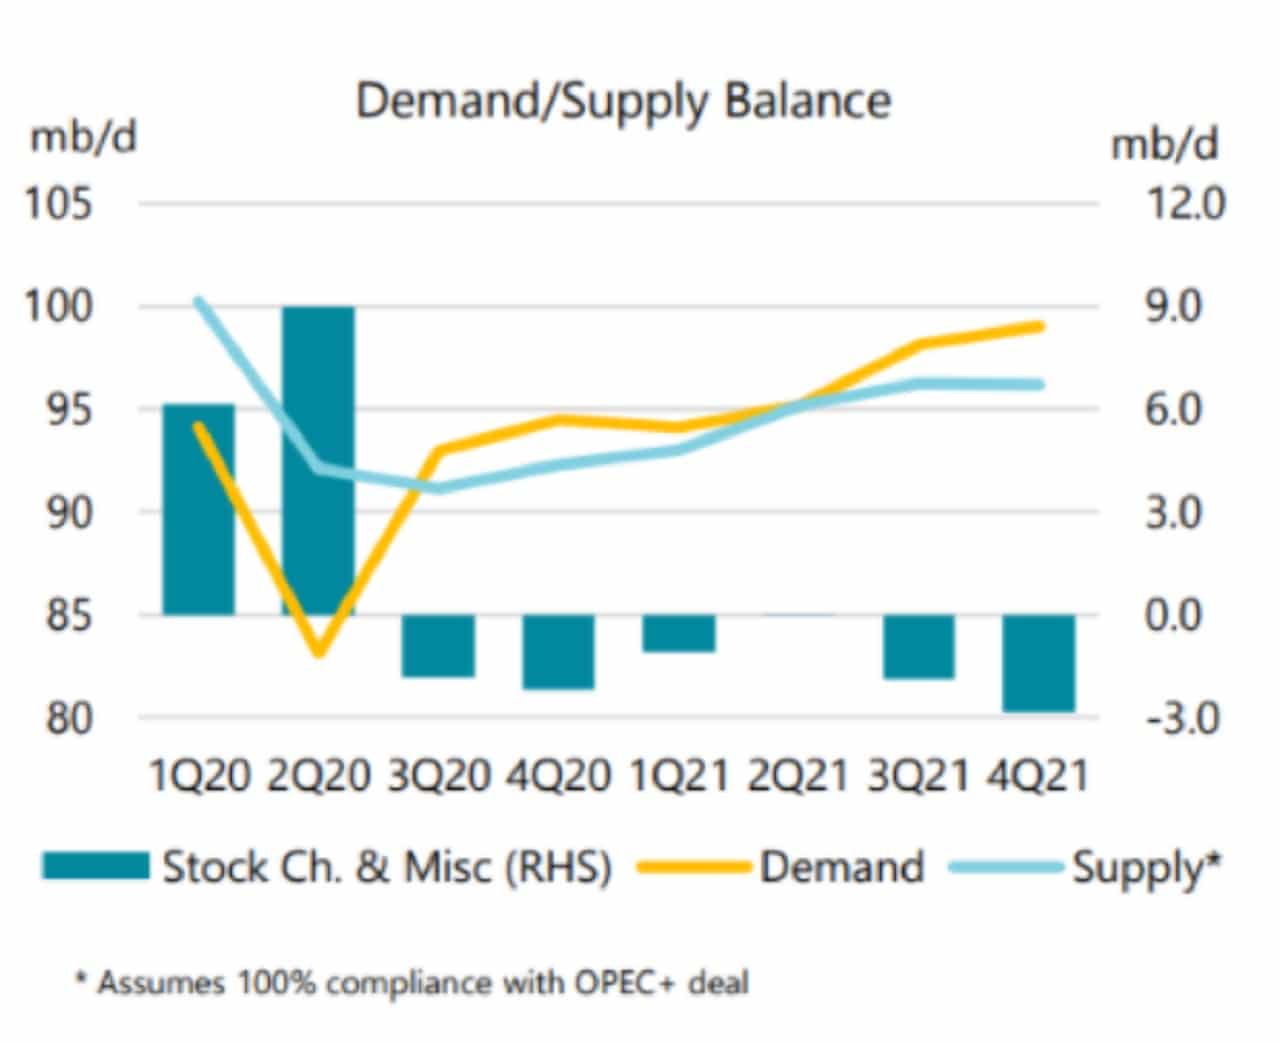 offre-demande-petrole-2020-2021